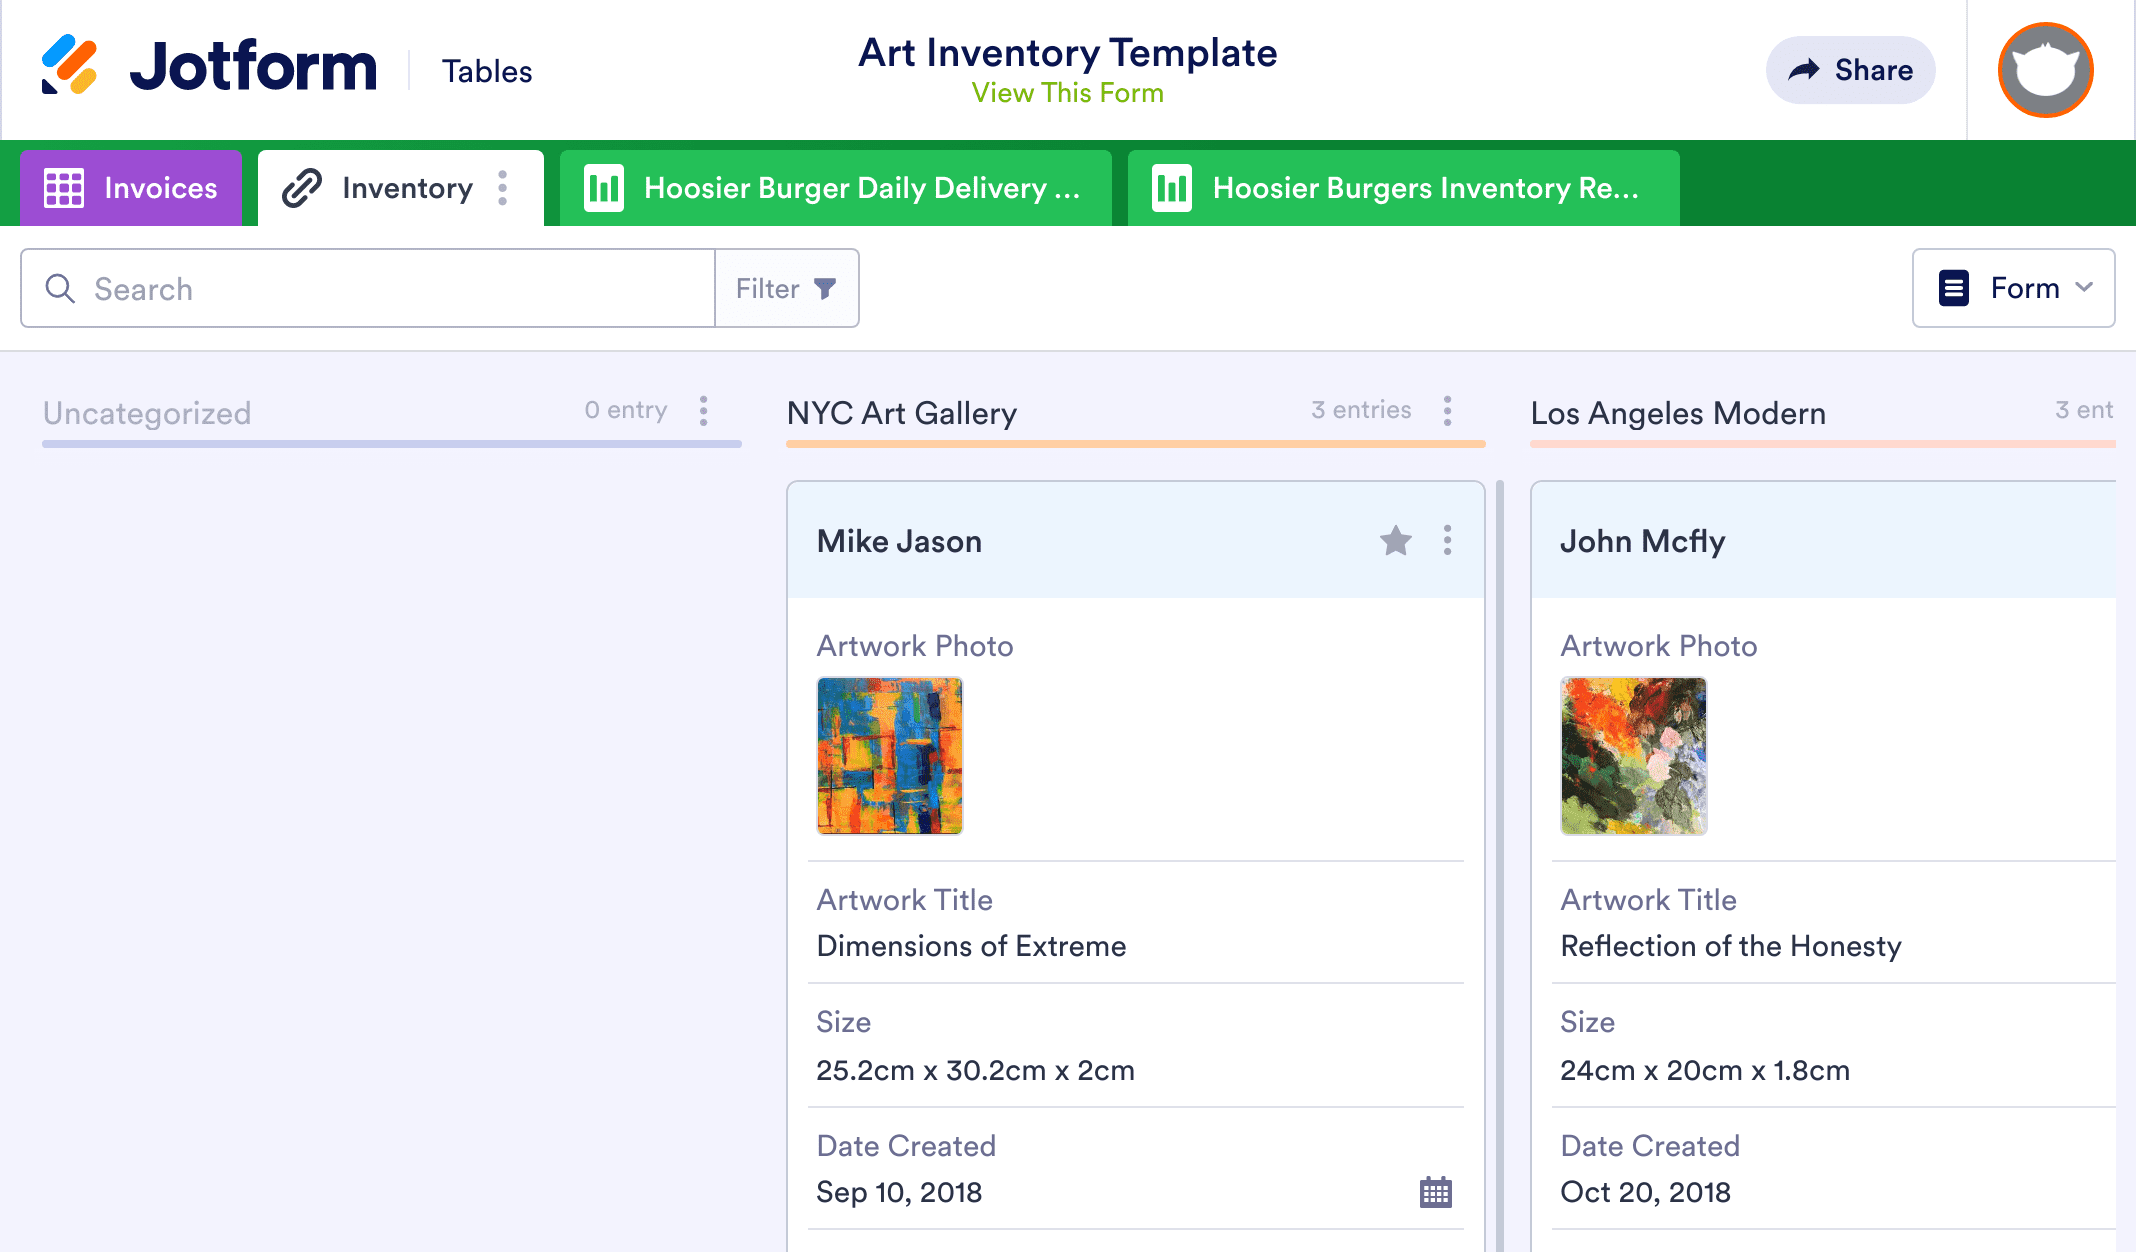 Art Inventory Template